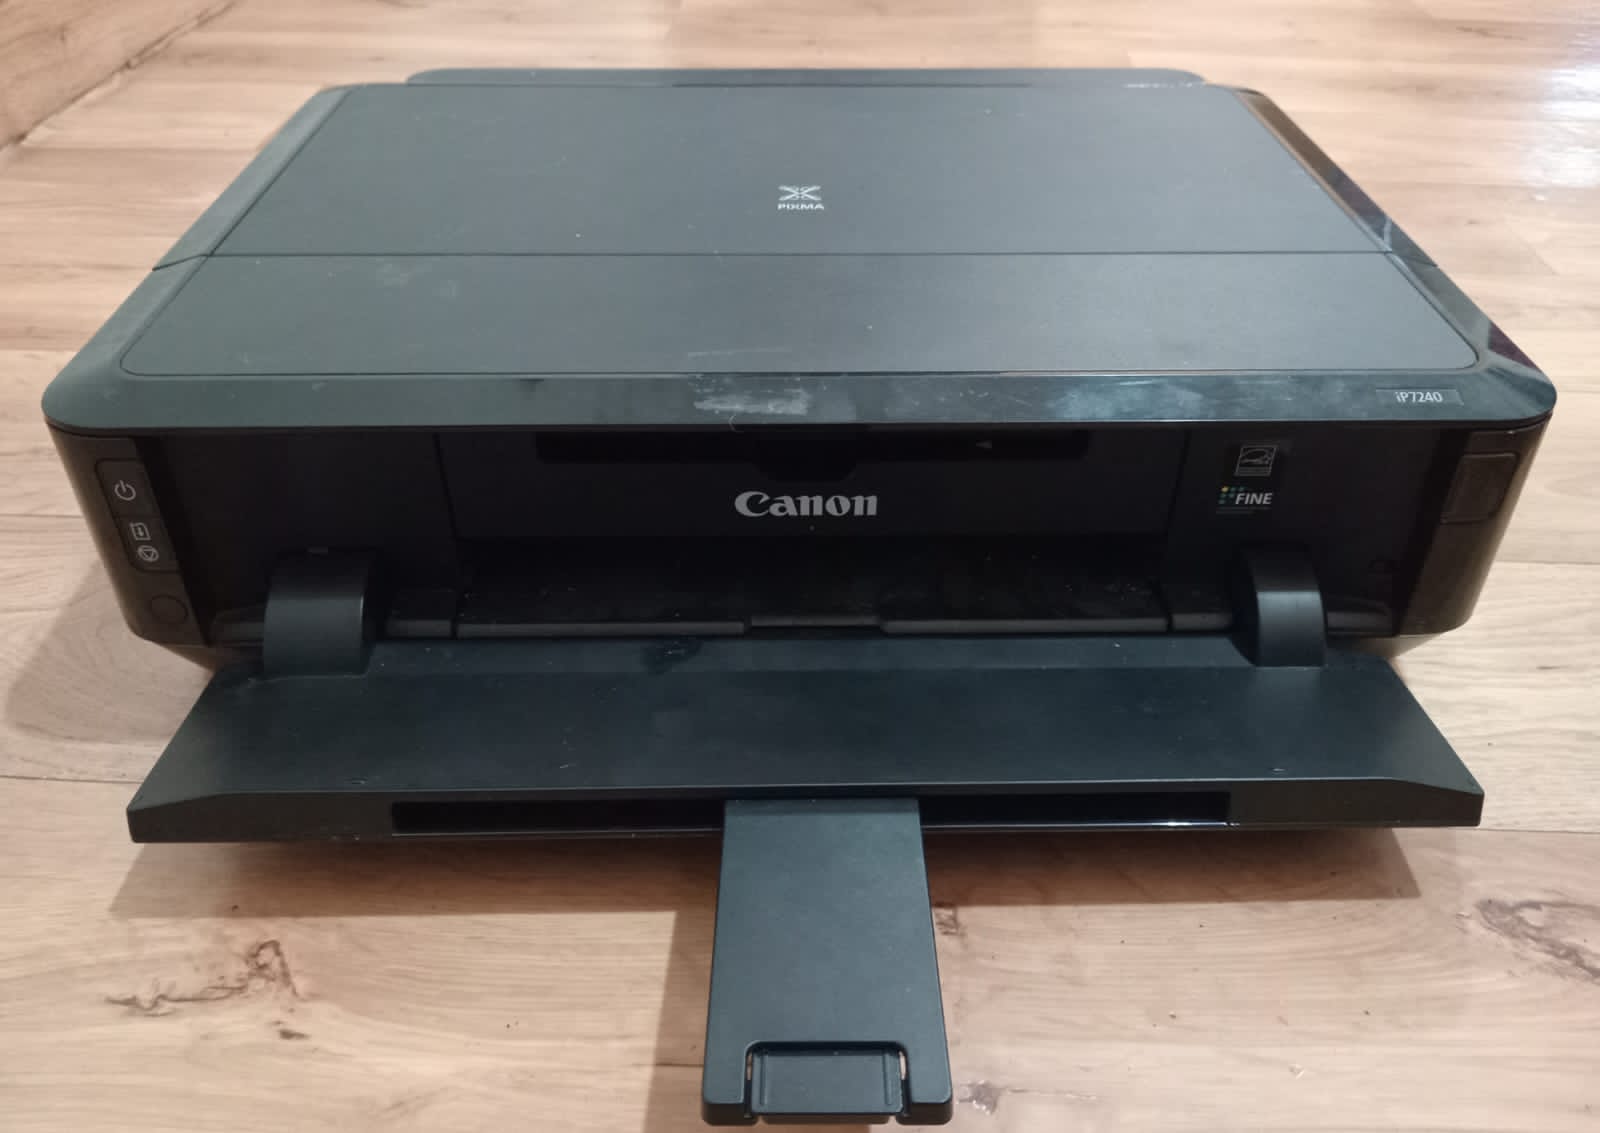 printer for sales